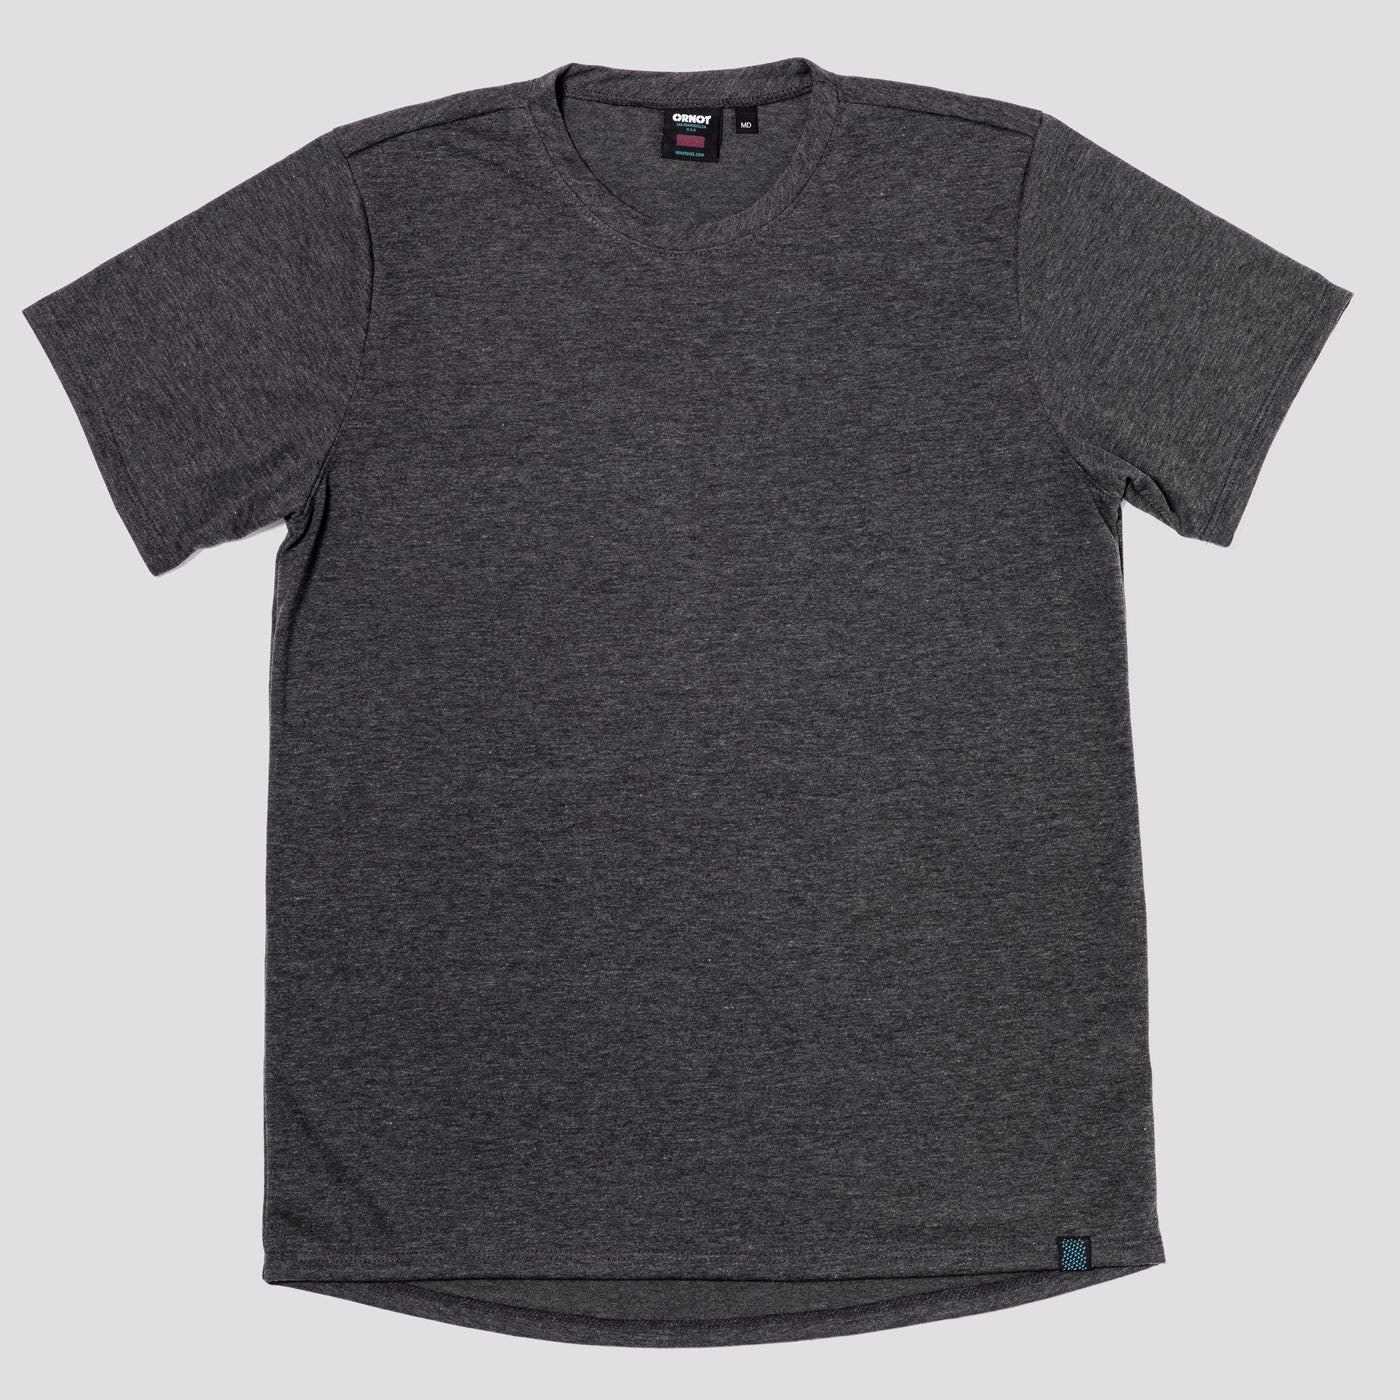 Men's Tech Shirt - Black Heather (final sale) – Ornot Online Store